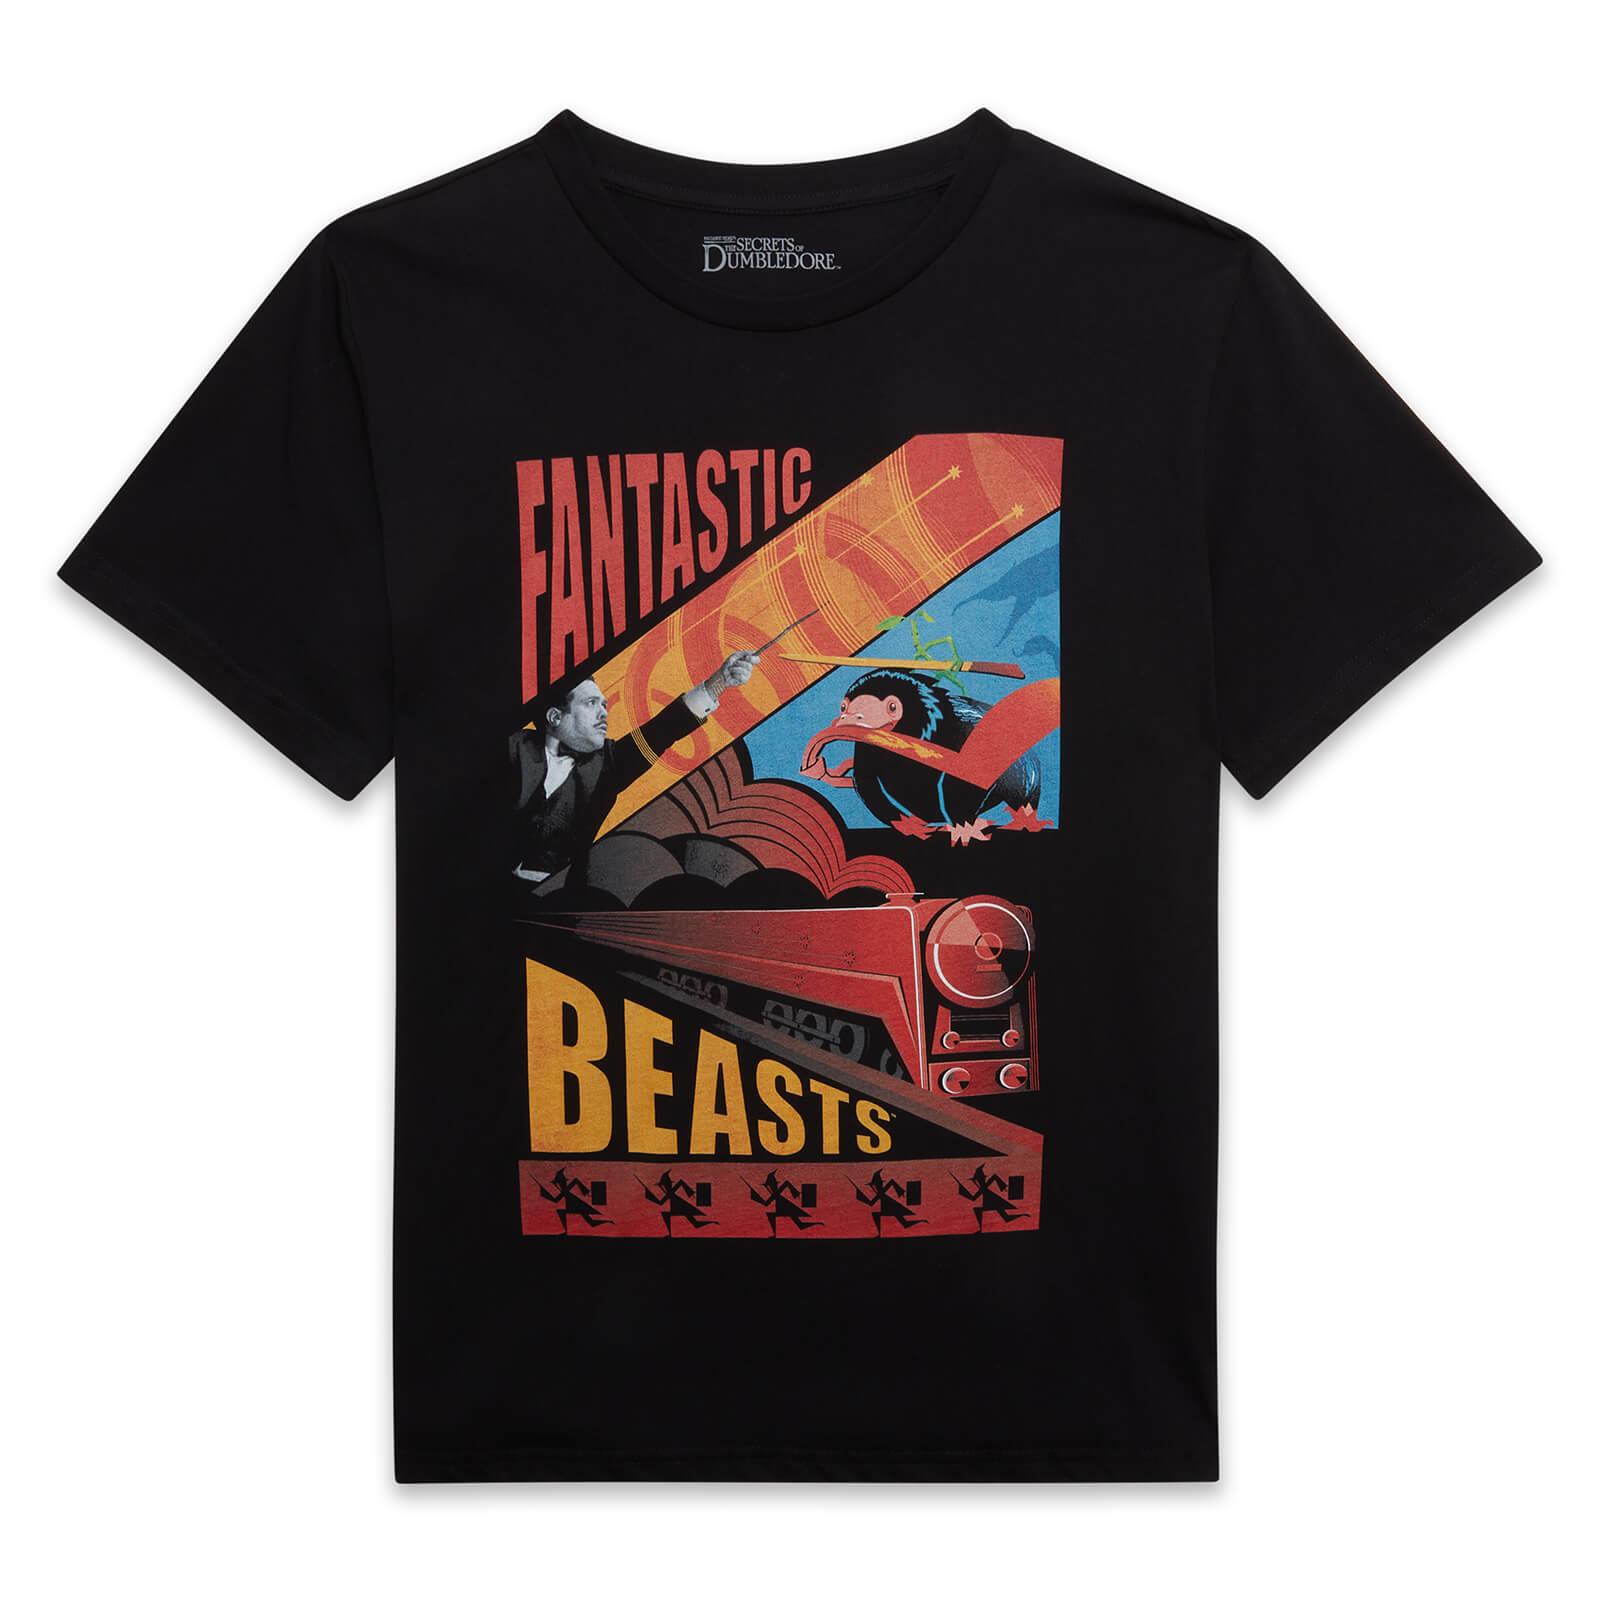 Fantastic Beasts Photographic Unisex T-Shirt - Black - XS